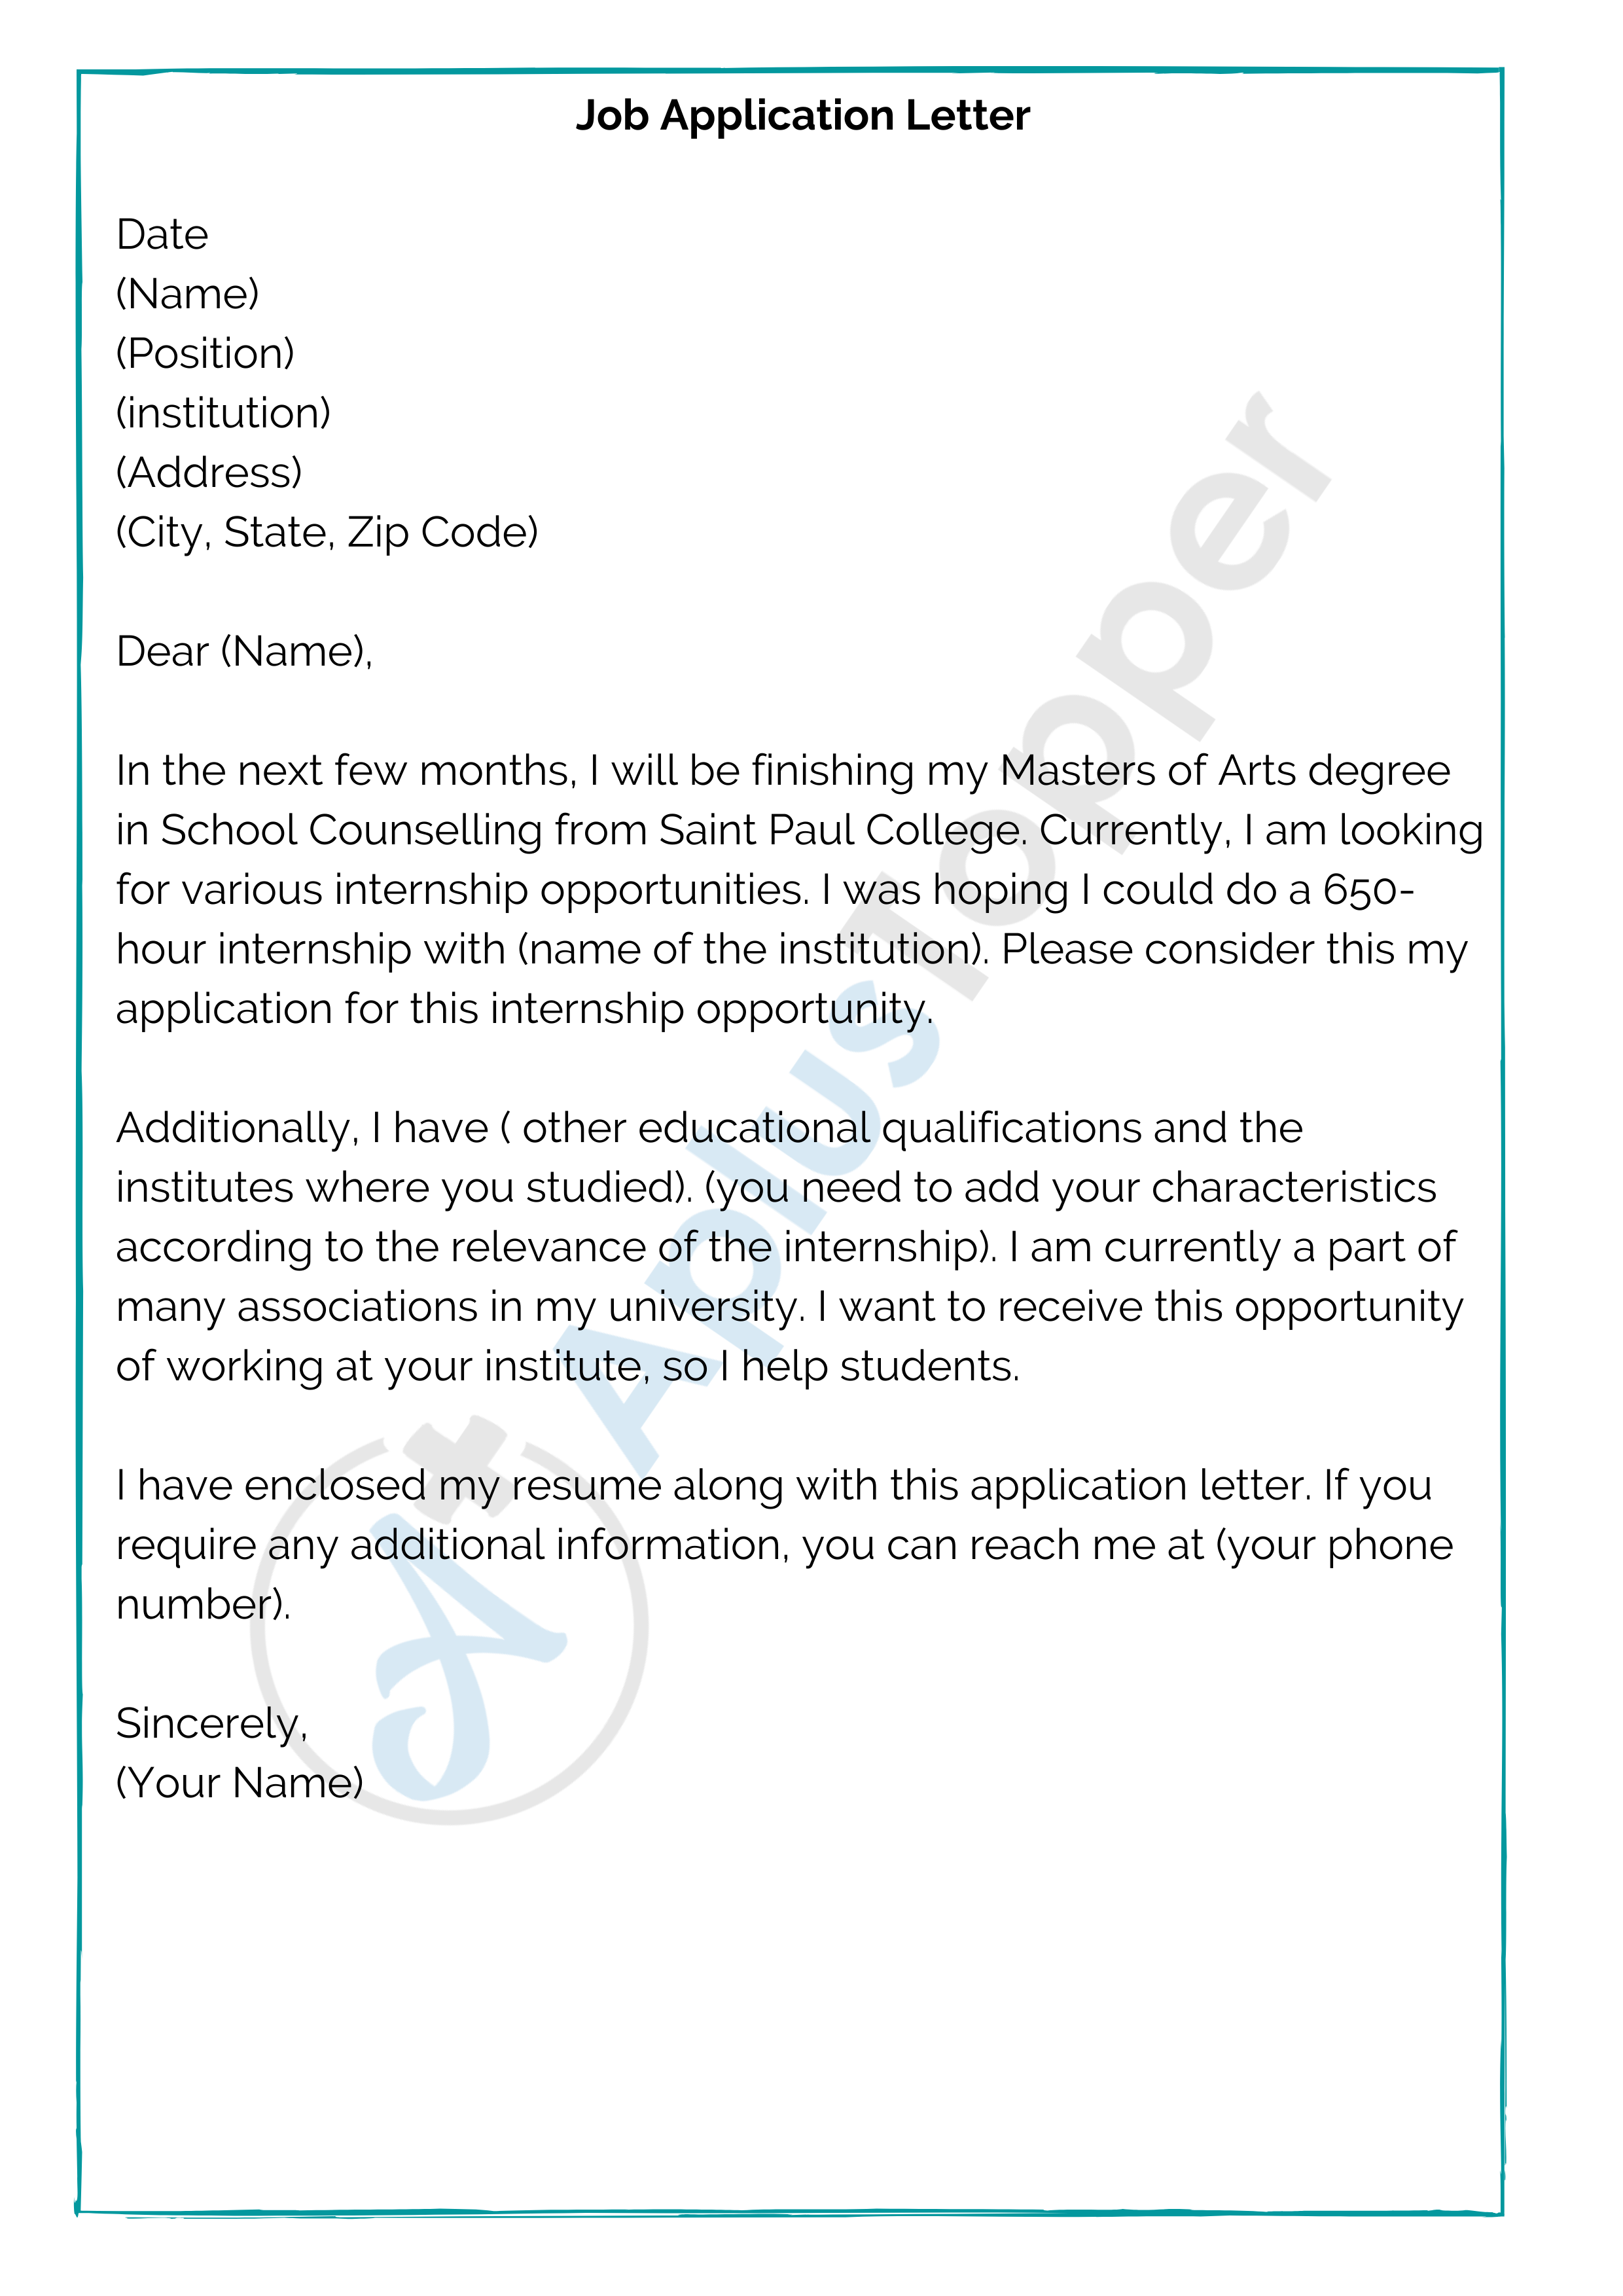 zaf application letter example